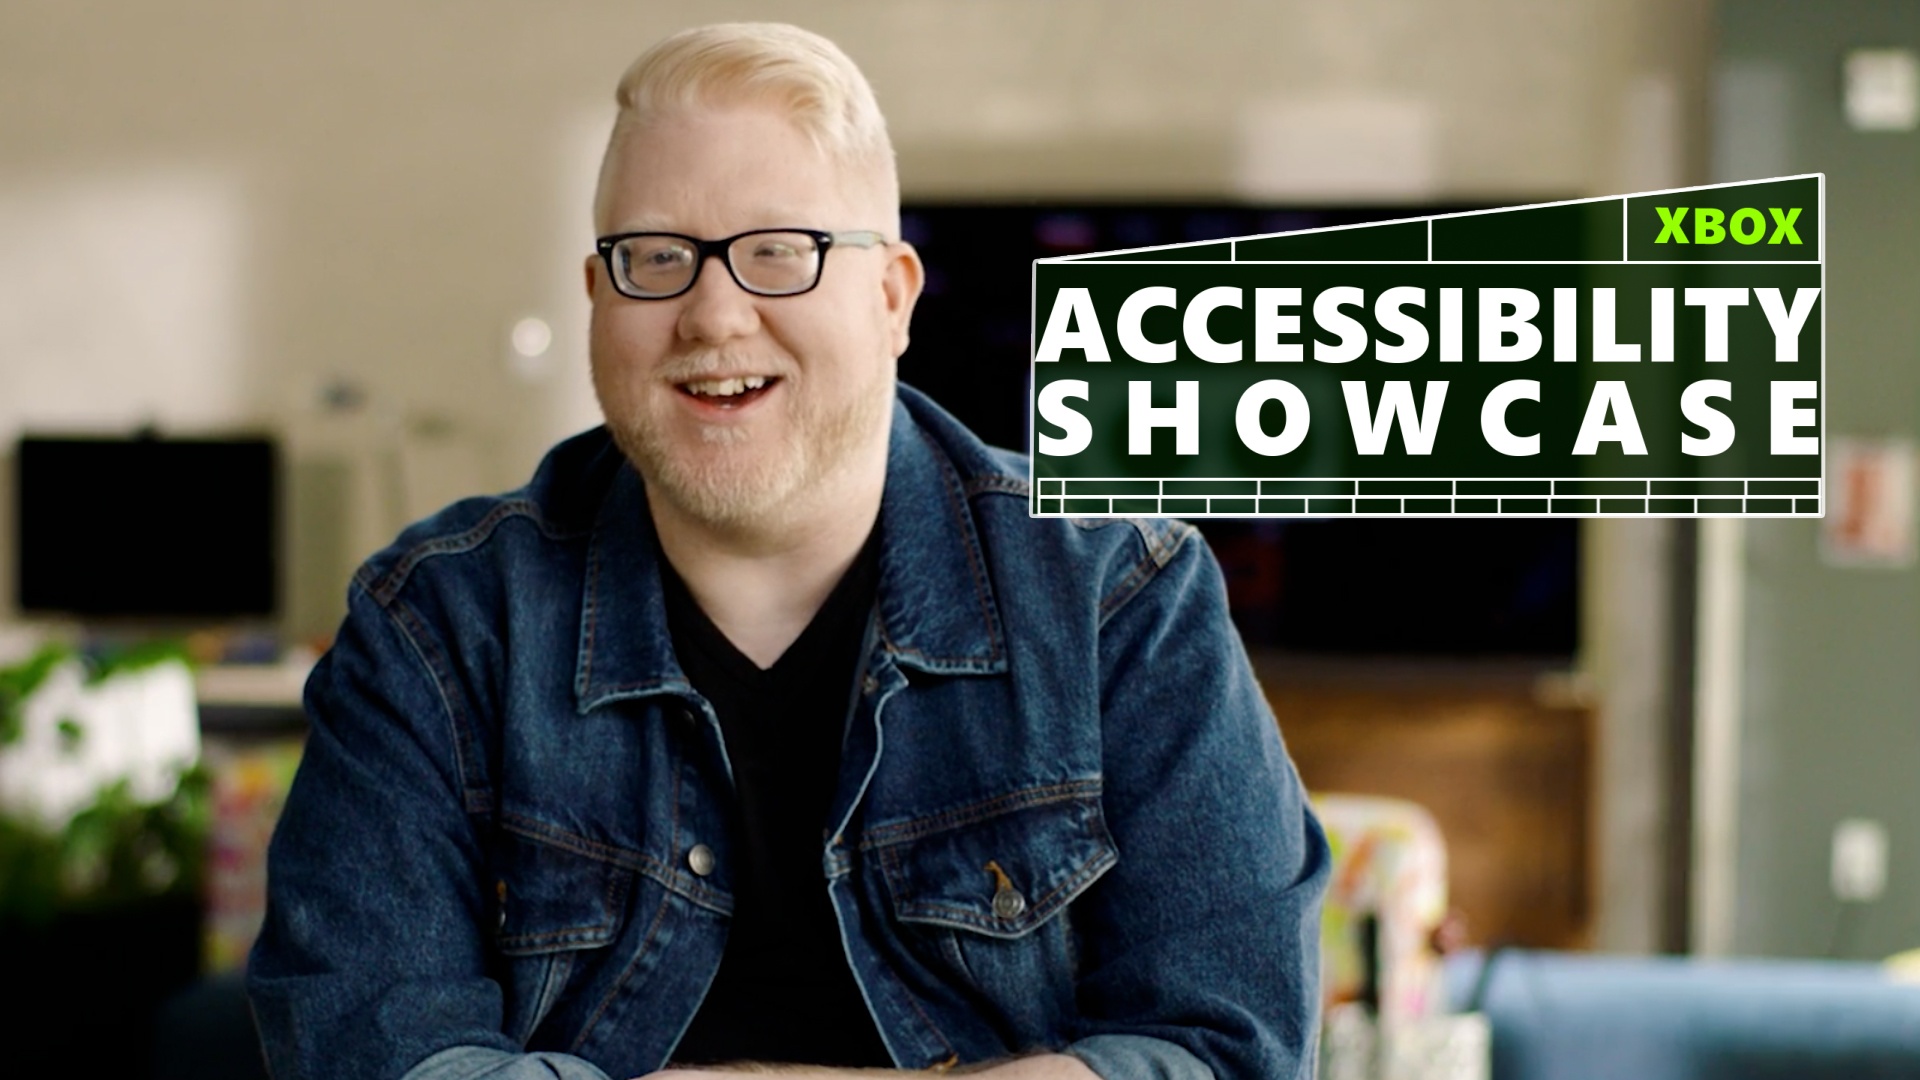 Xbox Accessibility Showcase_Steve Saylor Hero Image